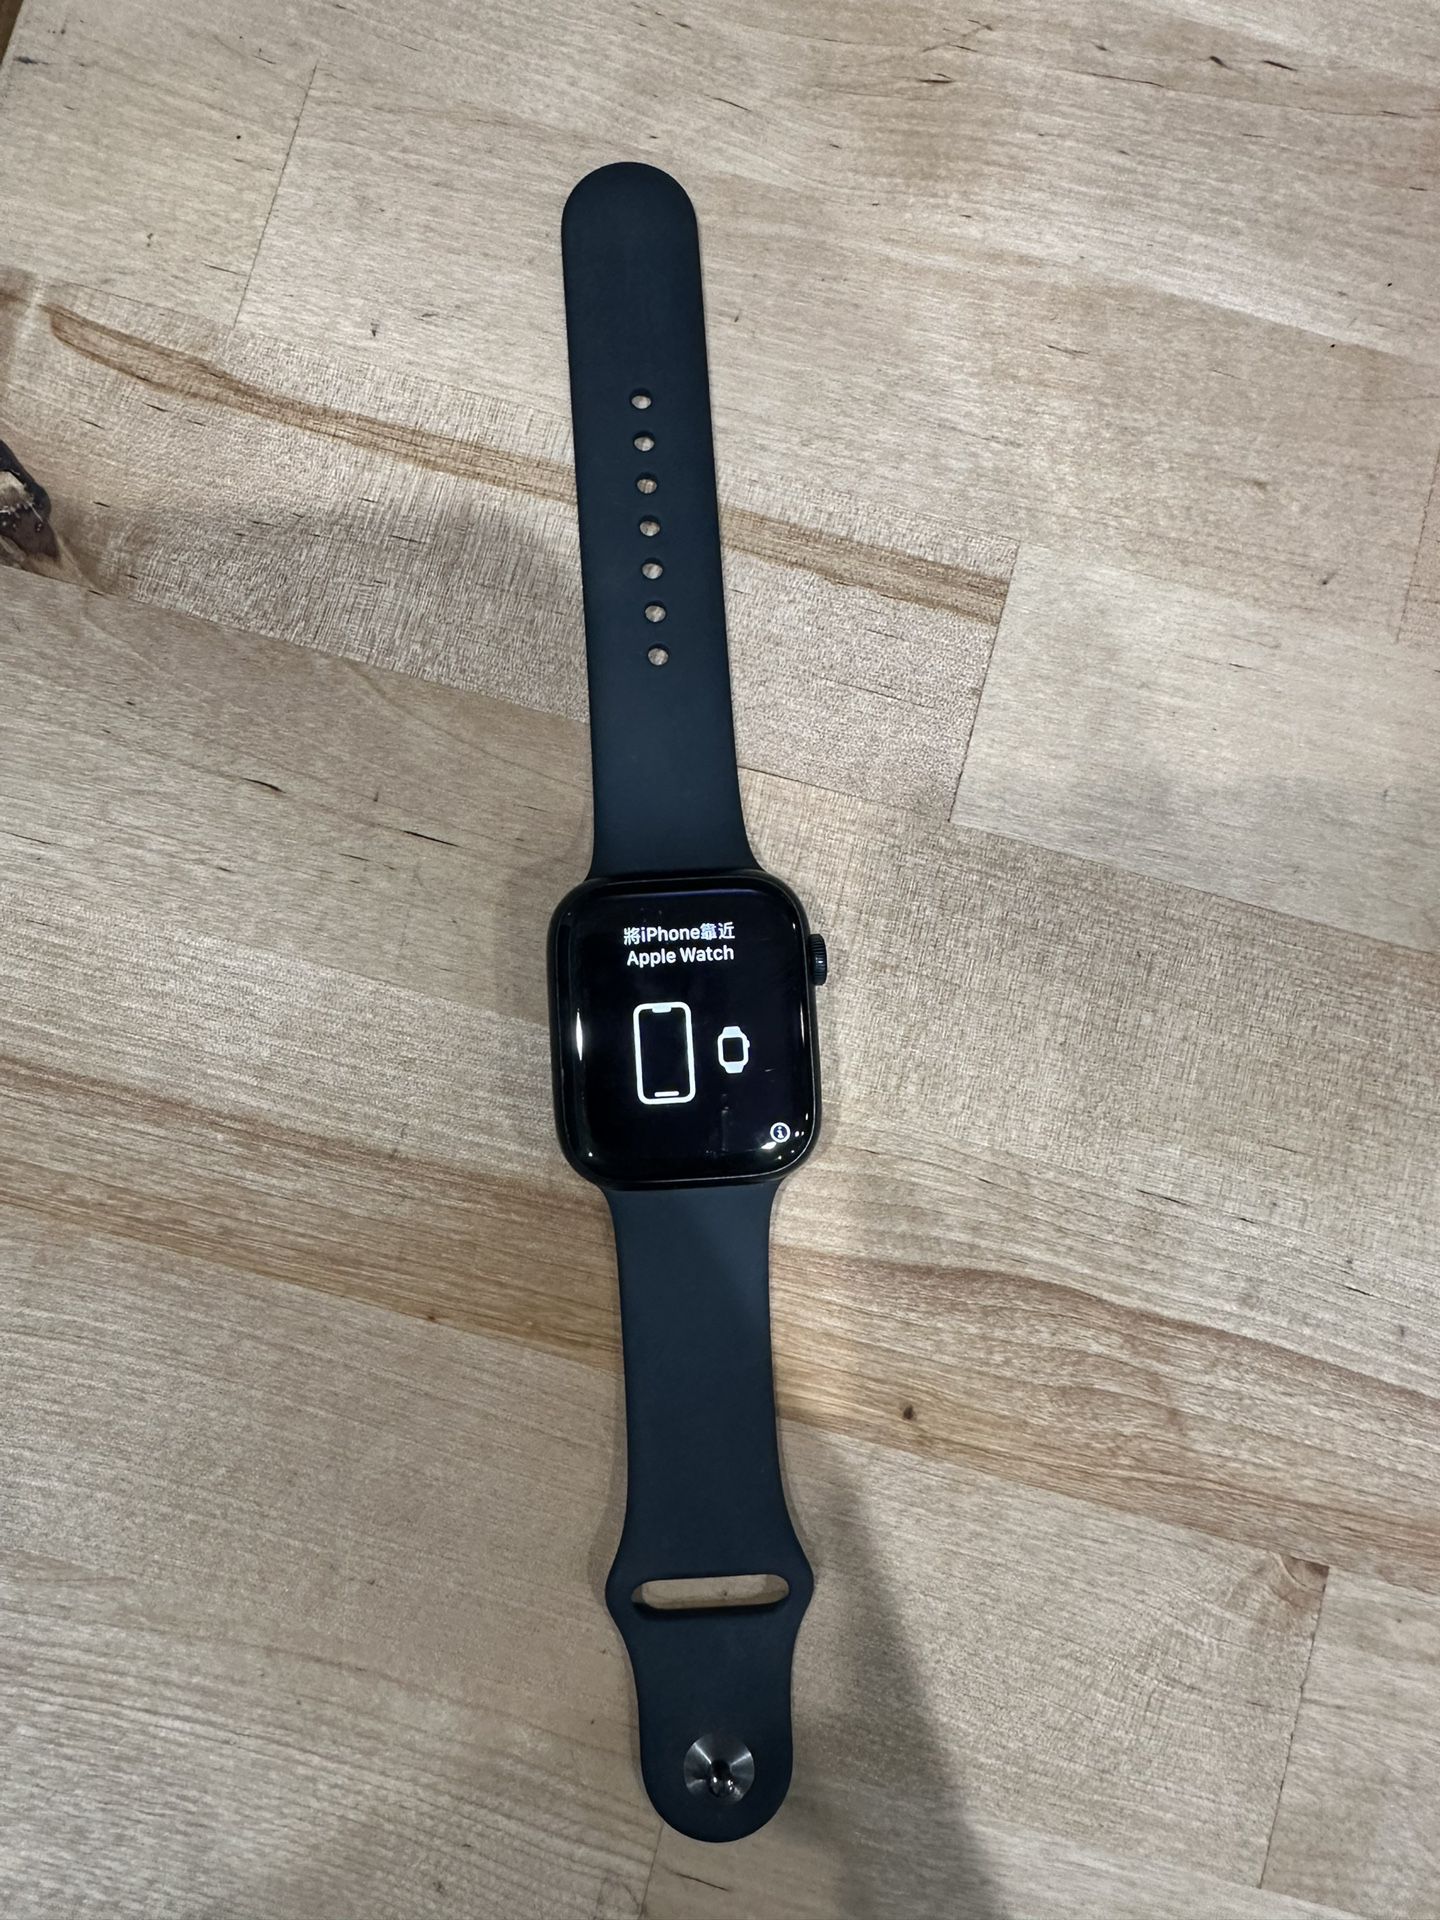 Series 7 Apple Watch